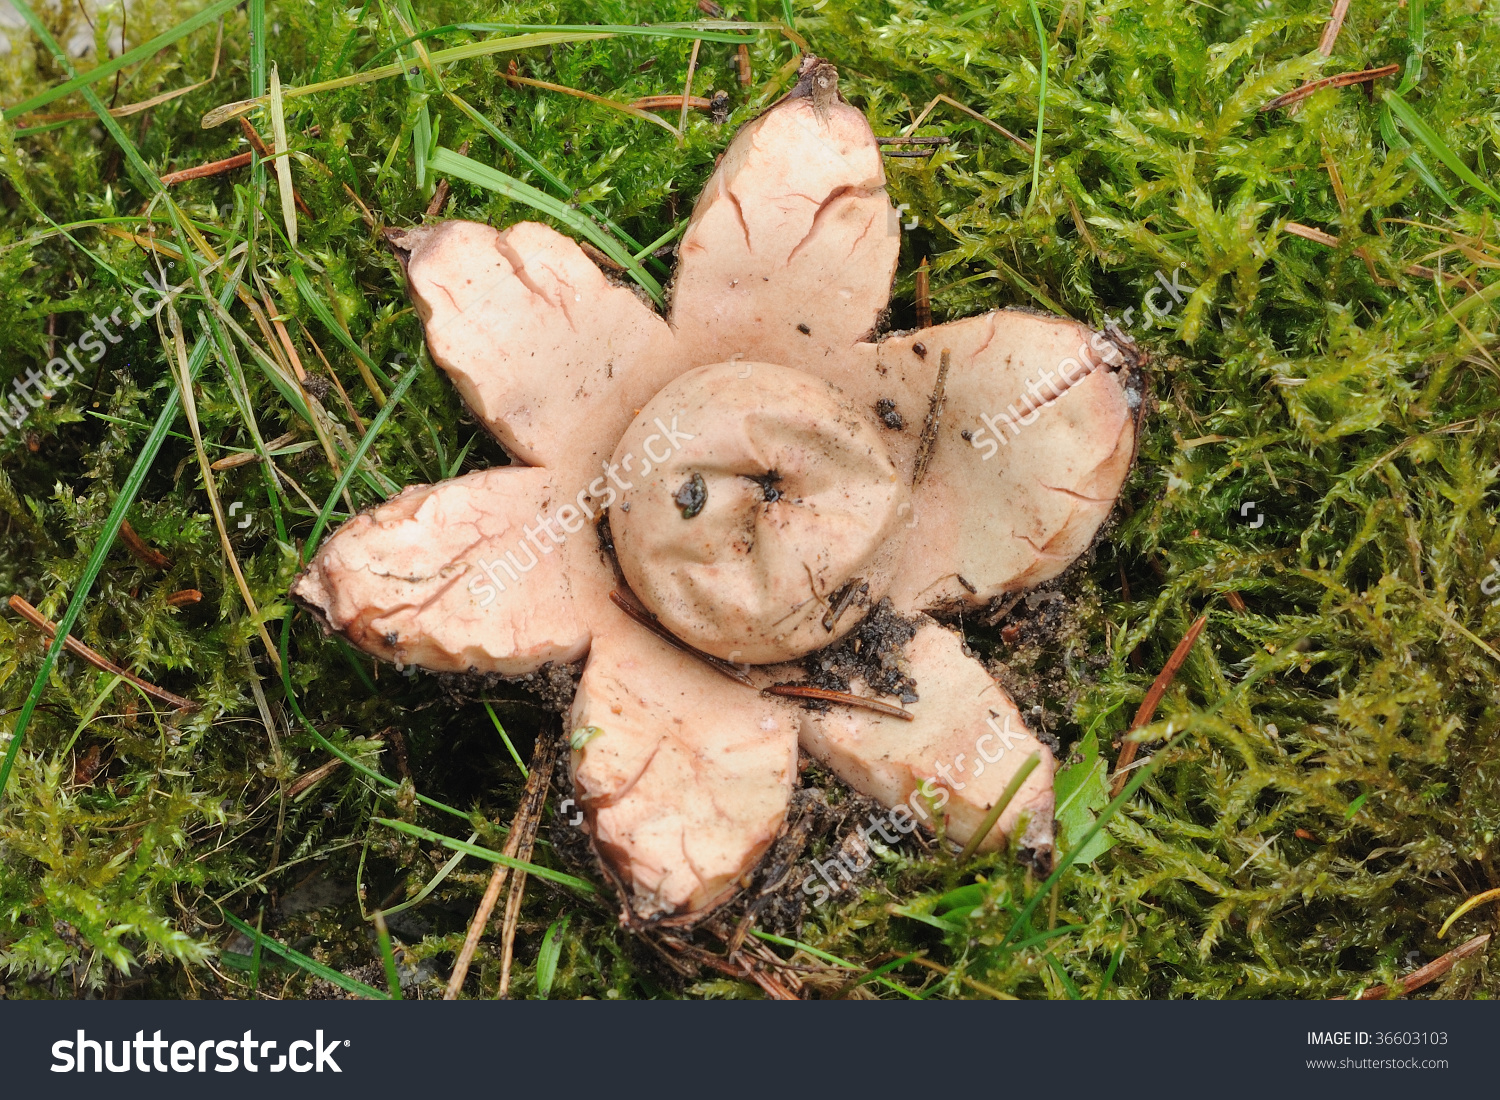 Earth Star Geastrum Mushroom Stock Photo 36603103 : Shutterstock.